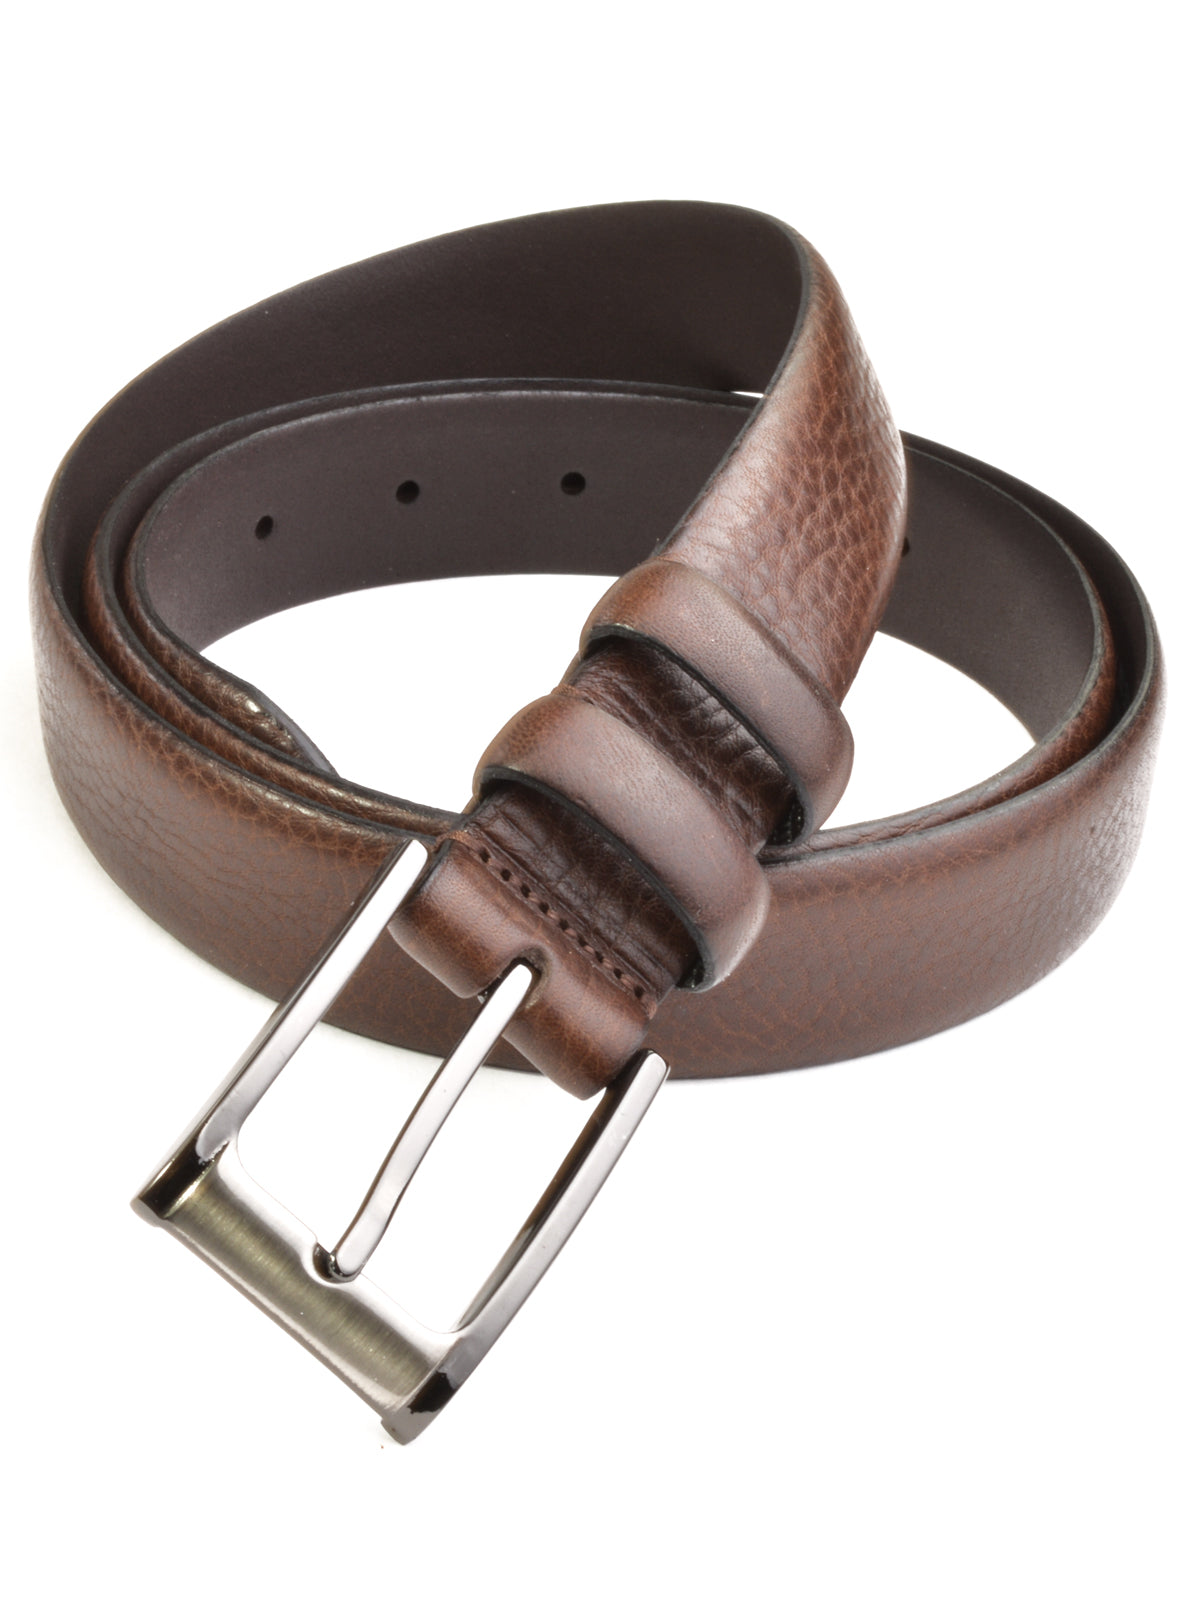 Status 1 1/4" Italian Leather Dress Belt 14791 - BROWN